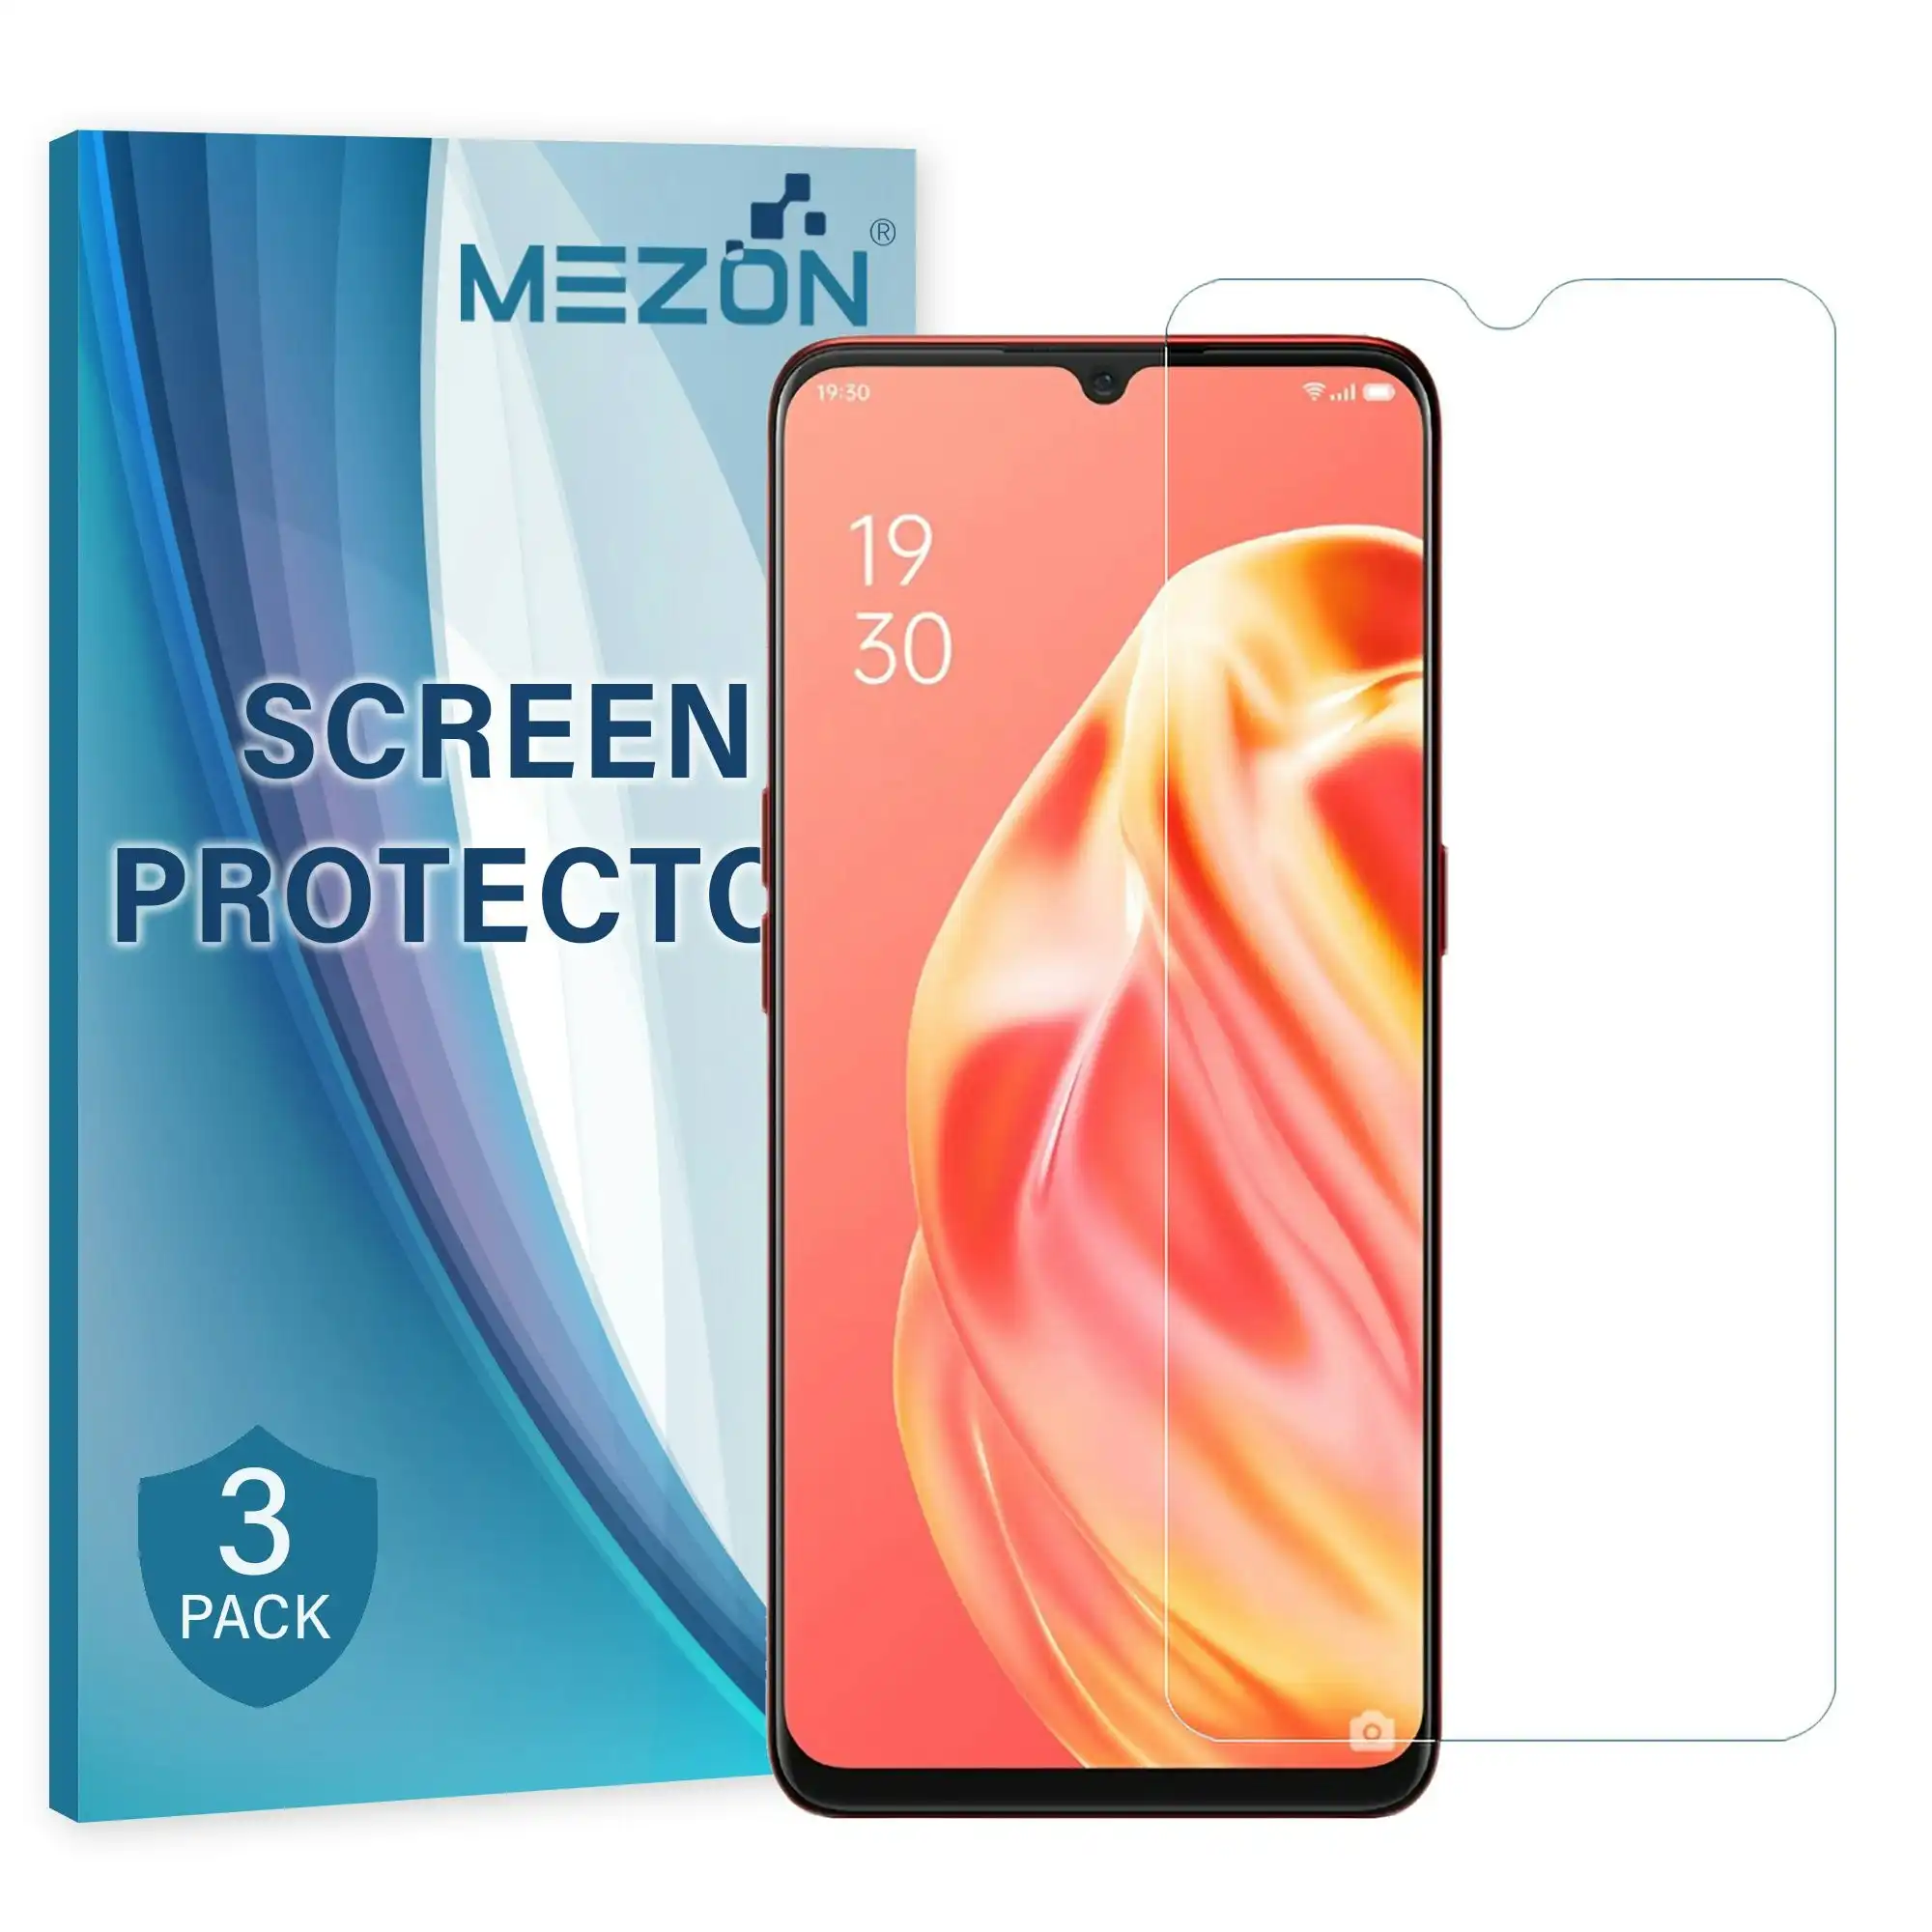 [3 Pack] MEZON Vivo Y11s Anti-Glare Matte Screen Protector Case Friendly Film (Vivo Y11s, Matte)